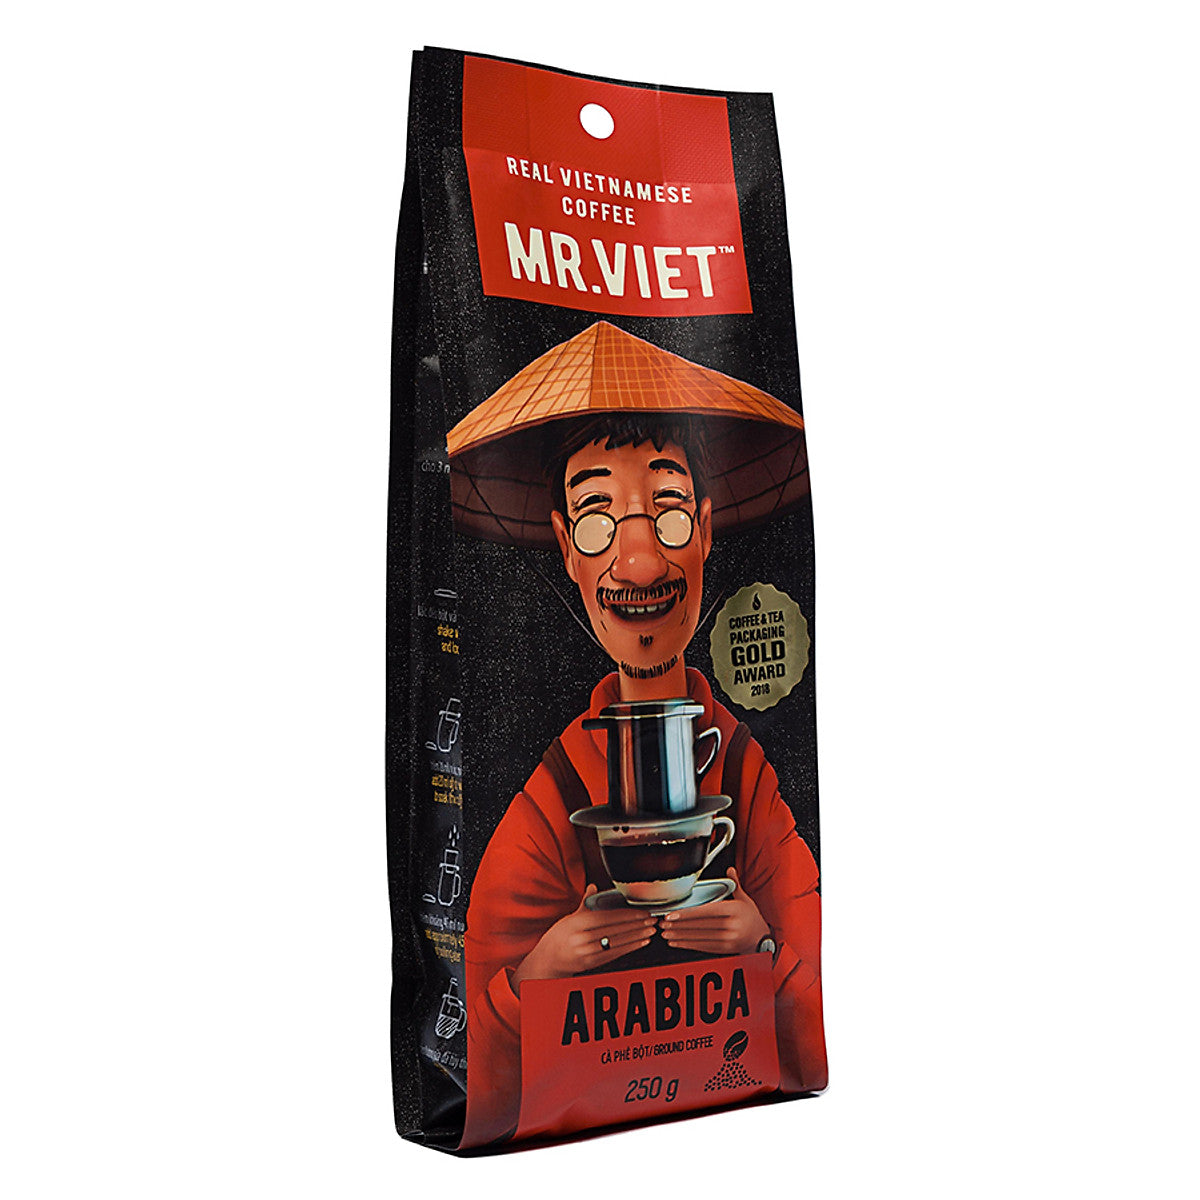 Mr. Viet Vietnamese Ground Coffee Vietnam Bag All Flavors 250g VietsWay USA Seller